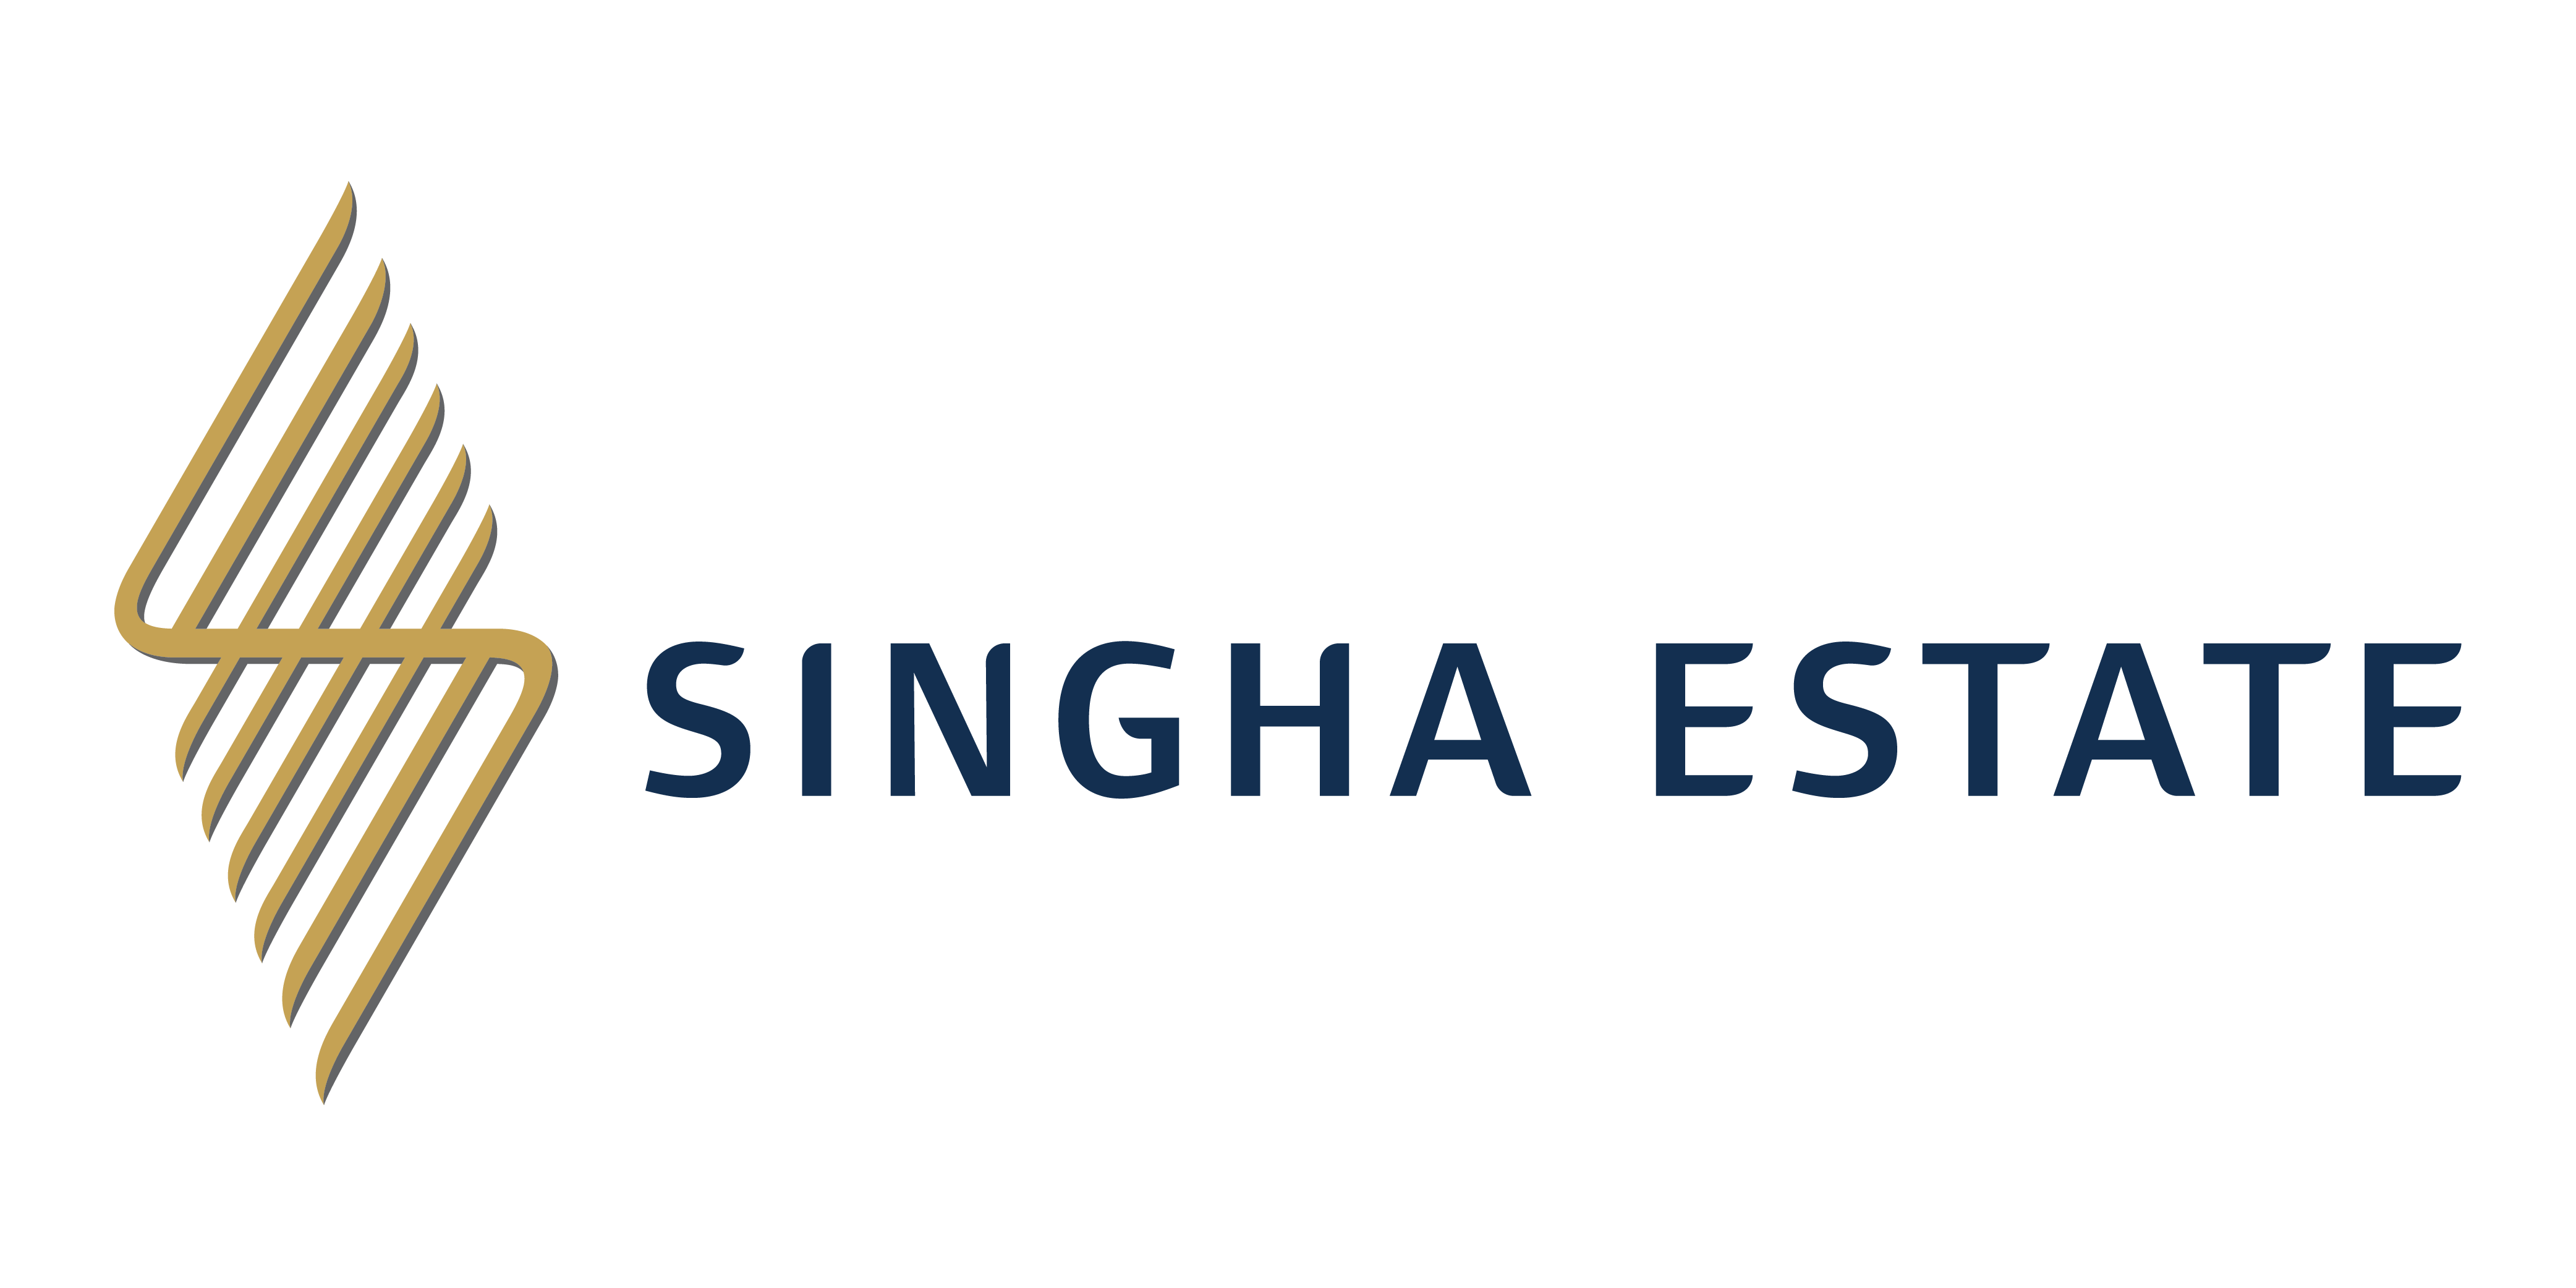 Singha Estate Logo